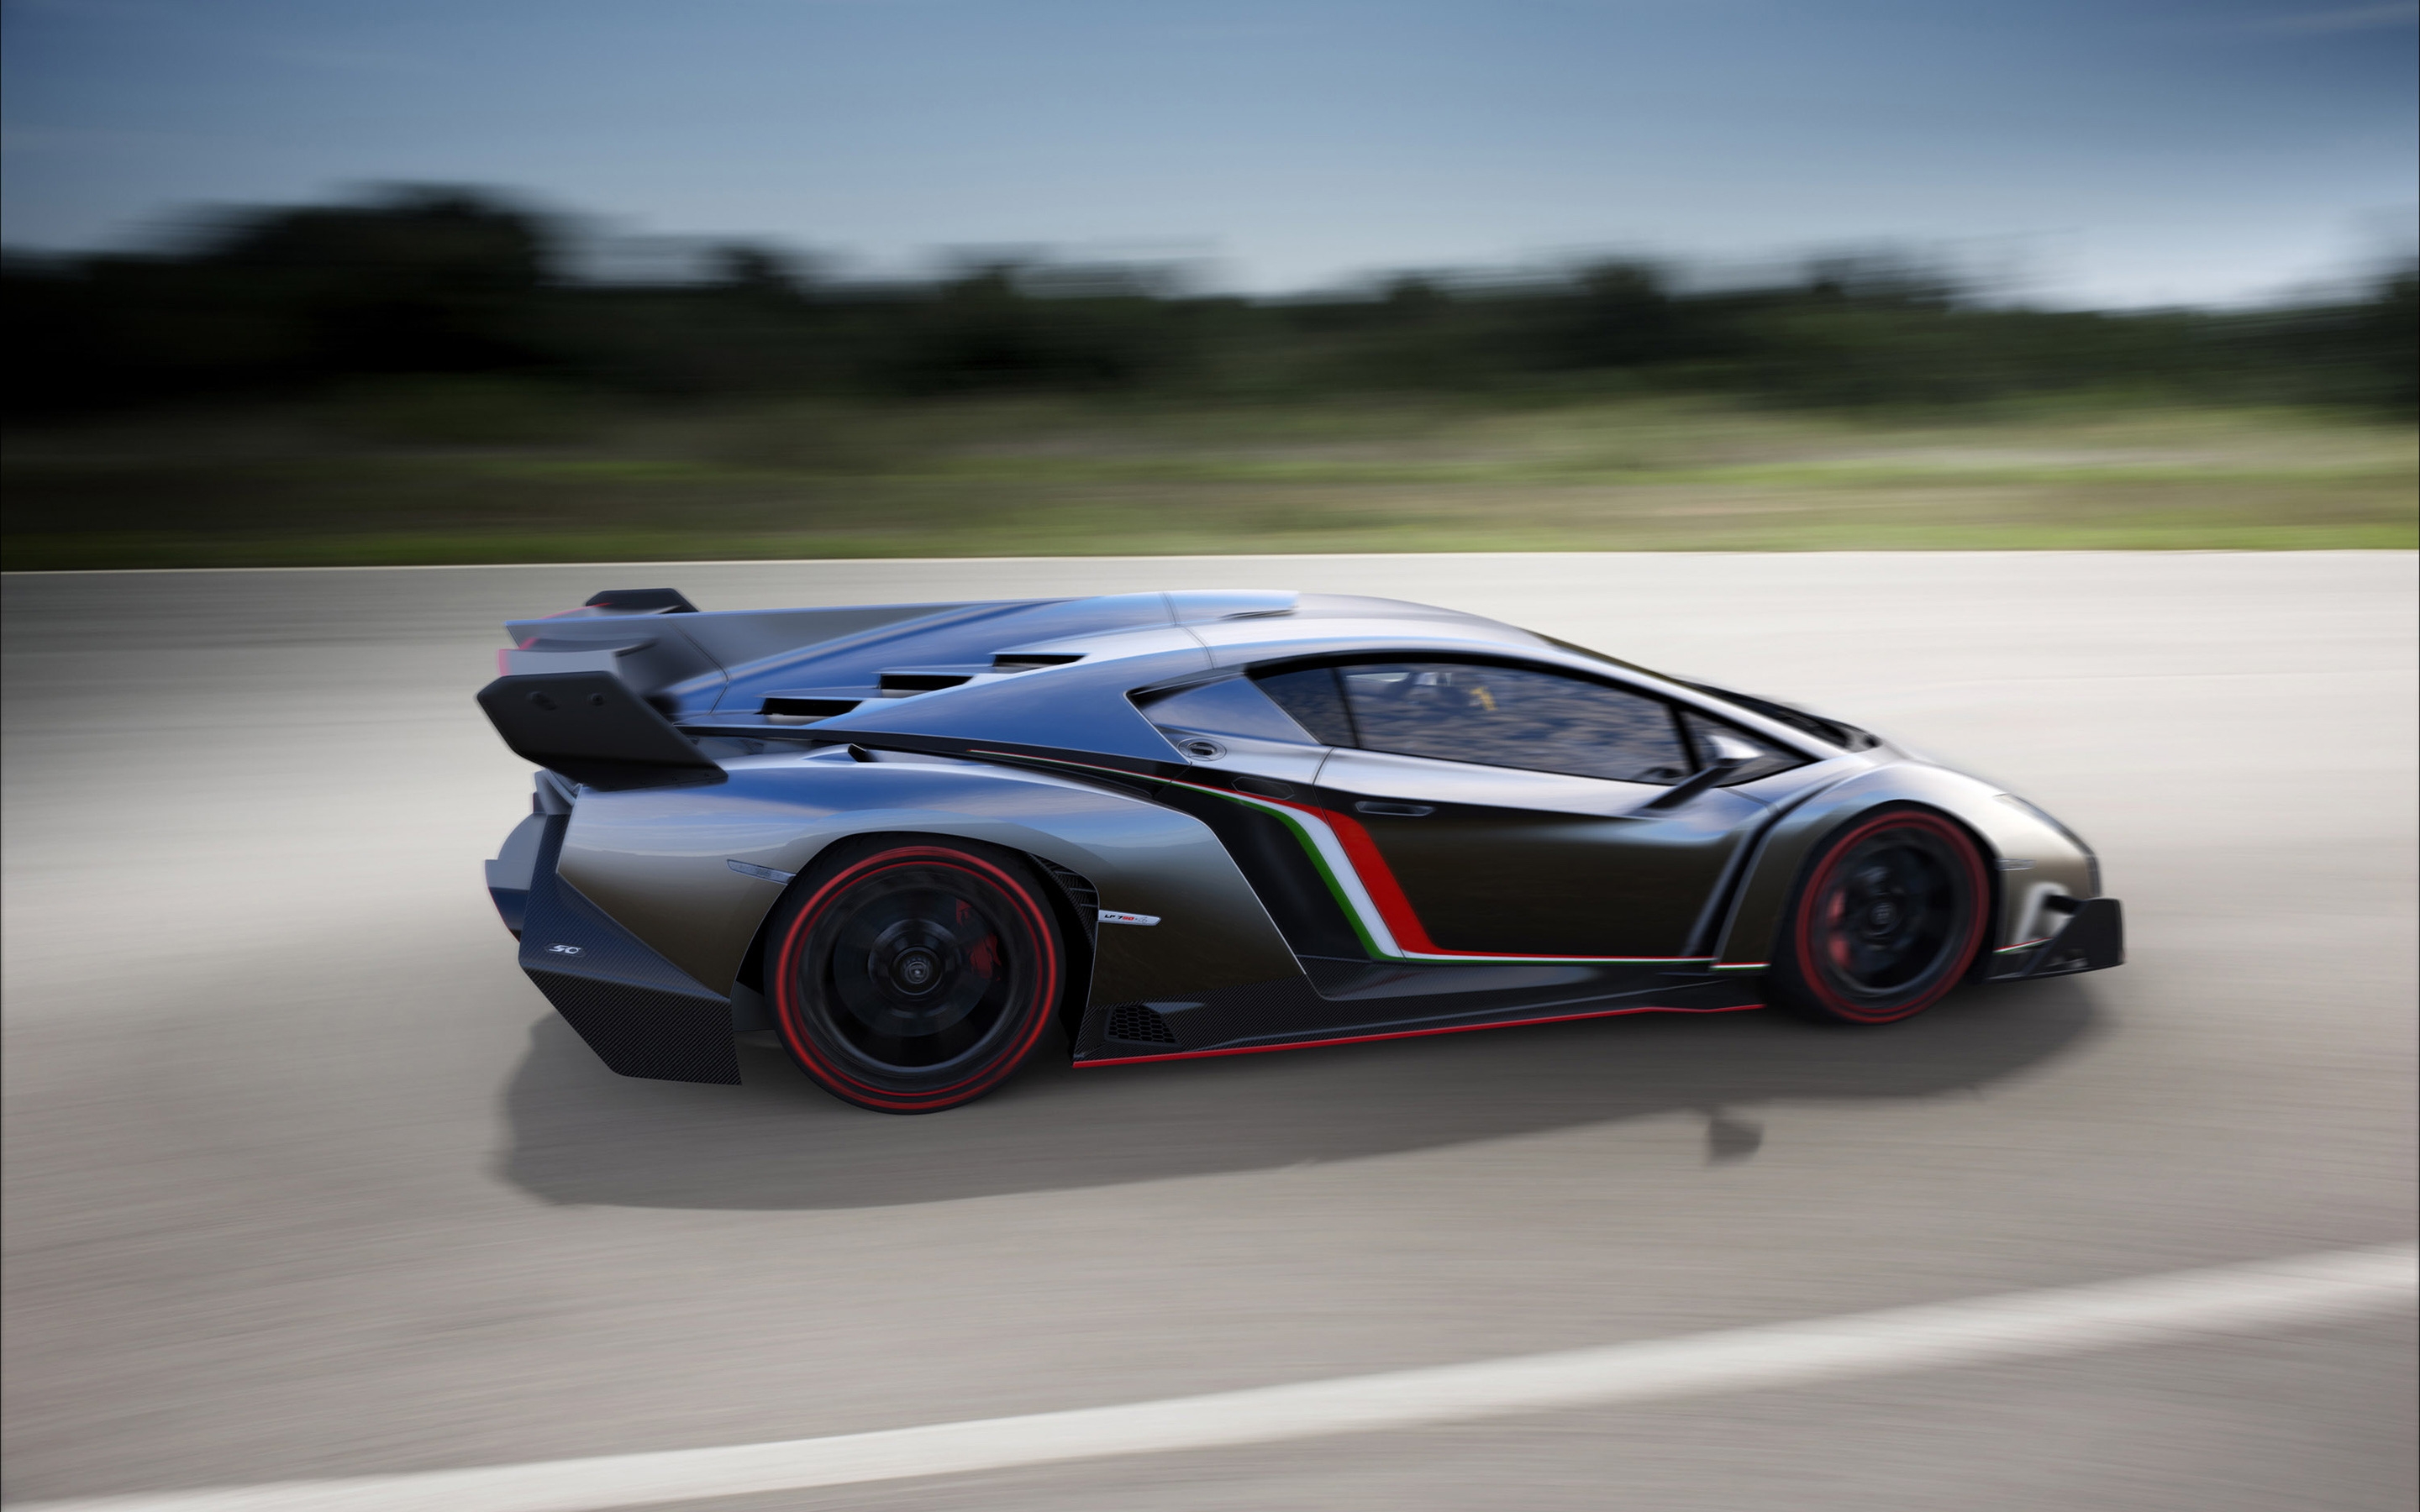 Lamborghini Veneno Speed for 2880 x 1800 Retina Display resolution